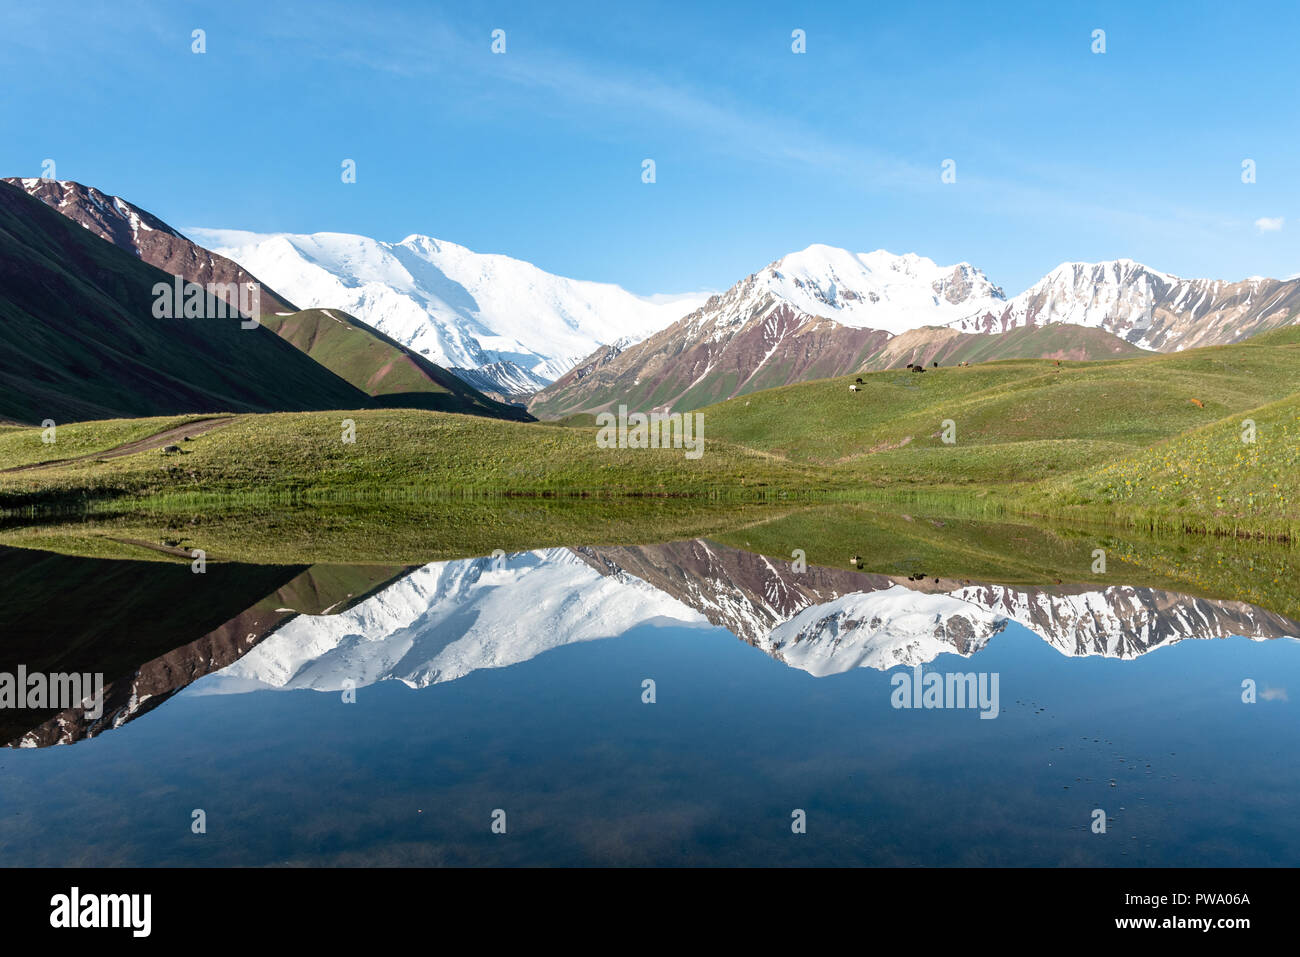 Peak Lenin mirrored in a mountain lake, Kyrgyzstan Stock Photo